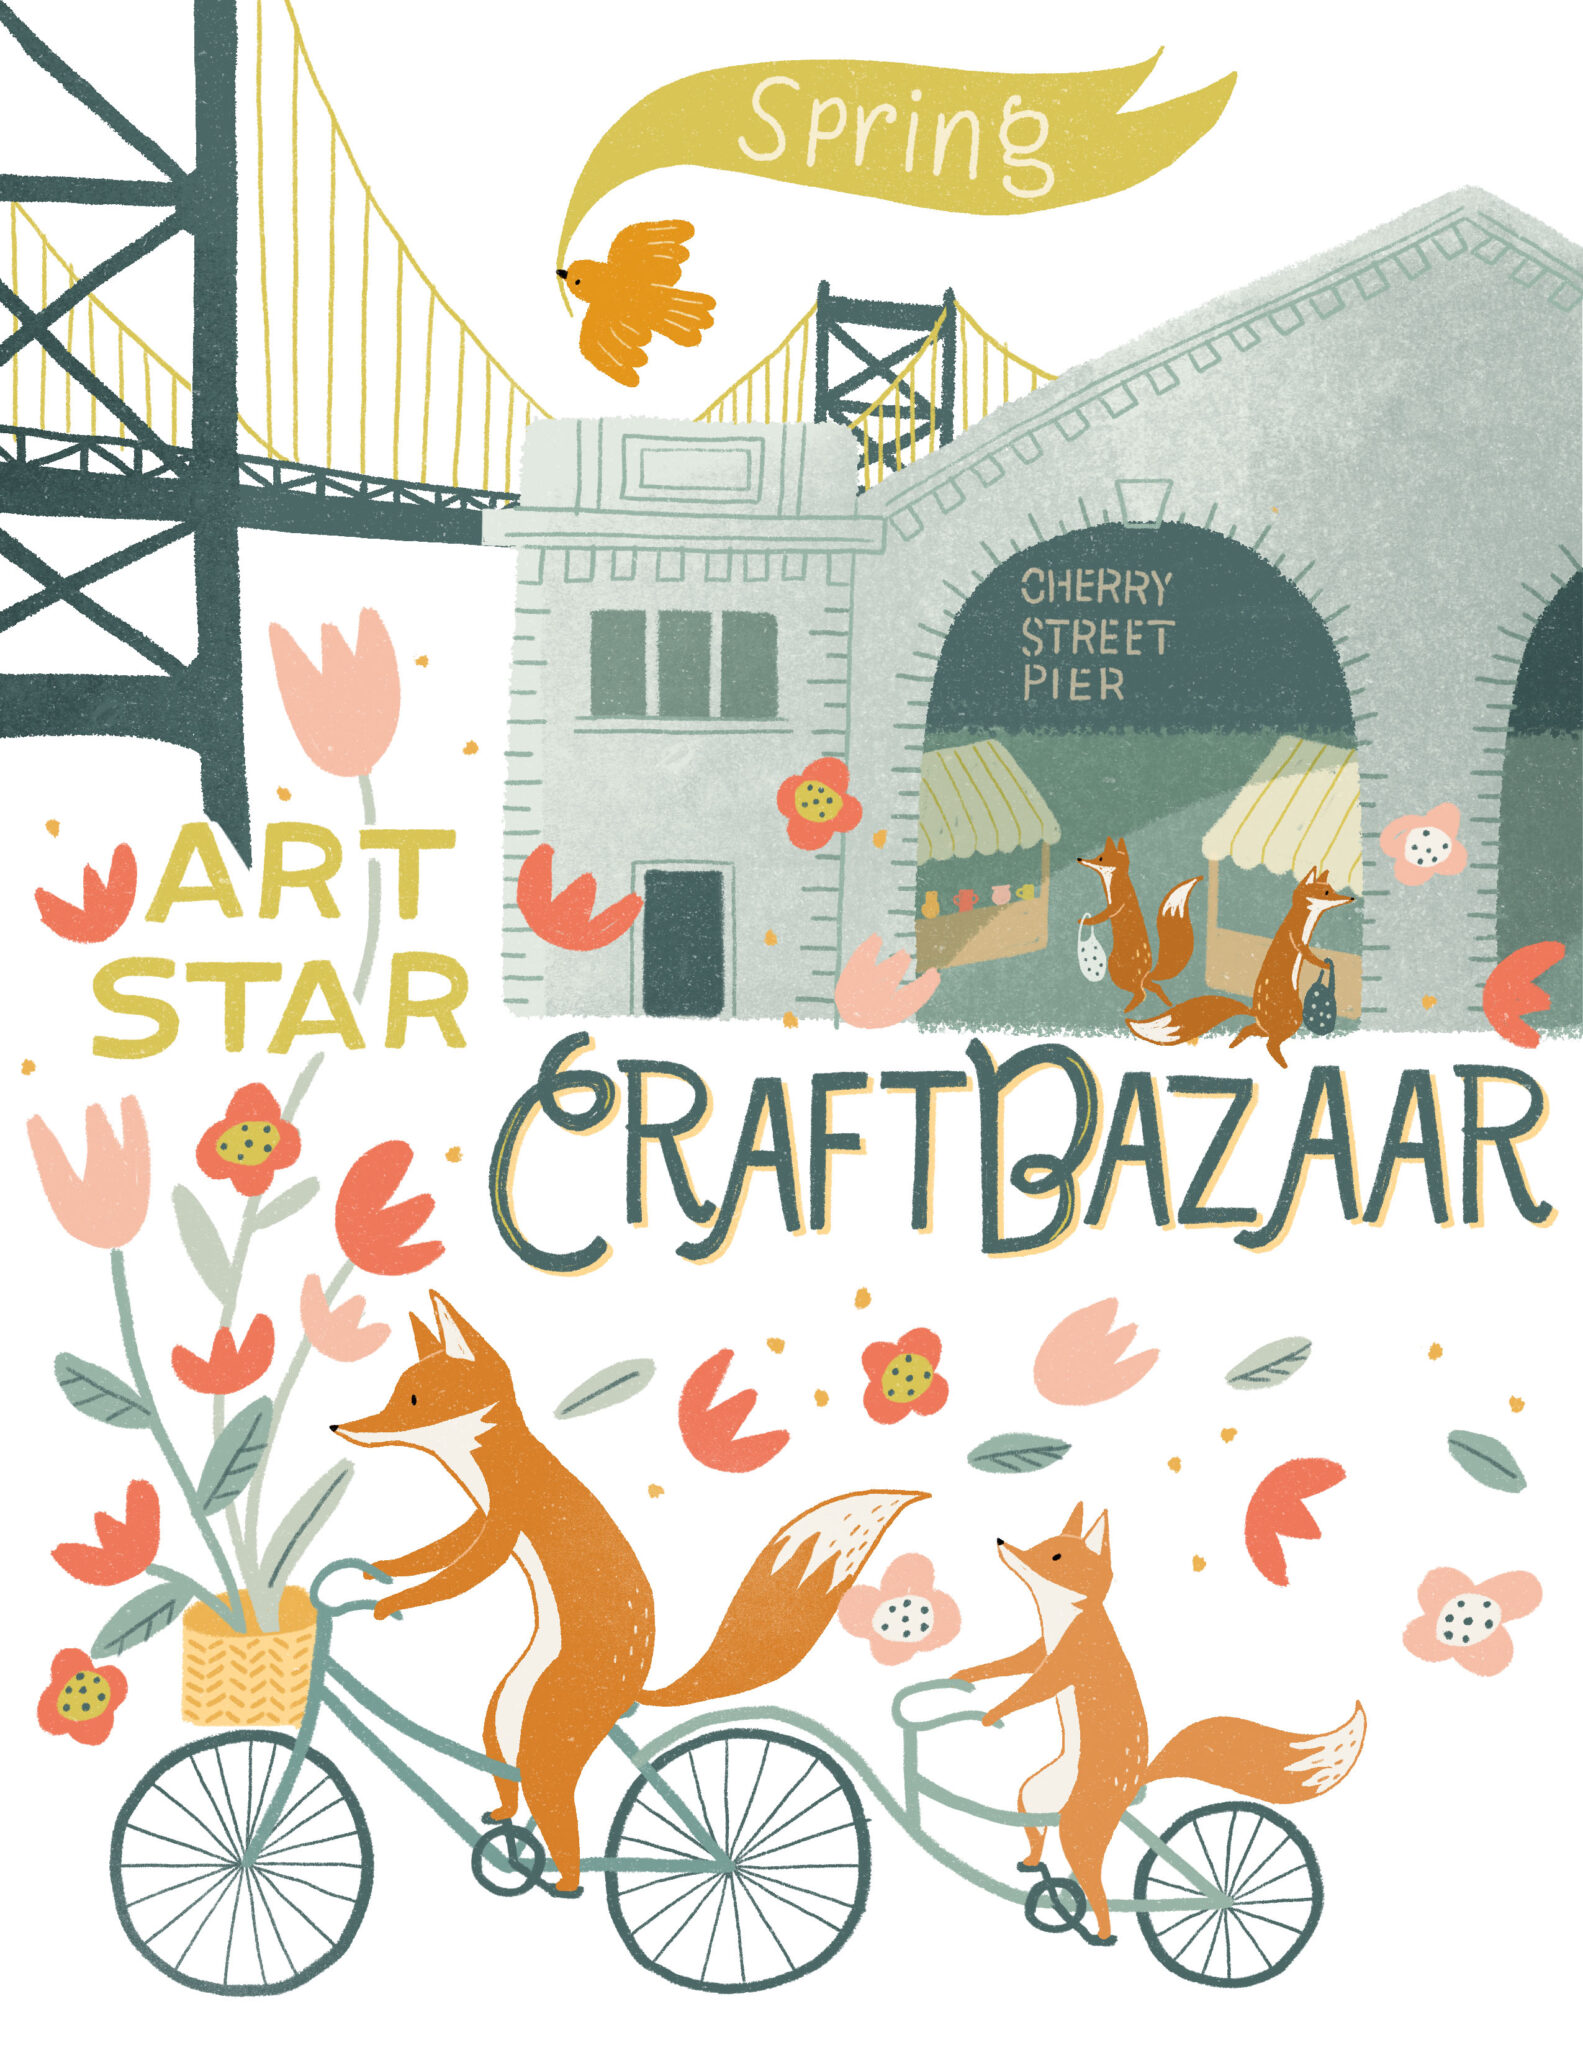 About Spring Art Star Craft Bazaar Art Star Craft Bazaar